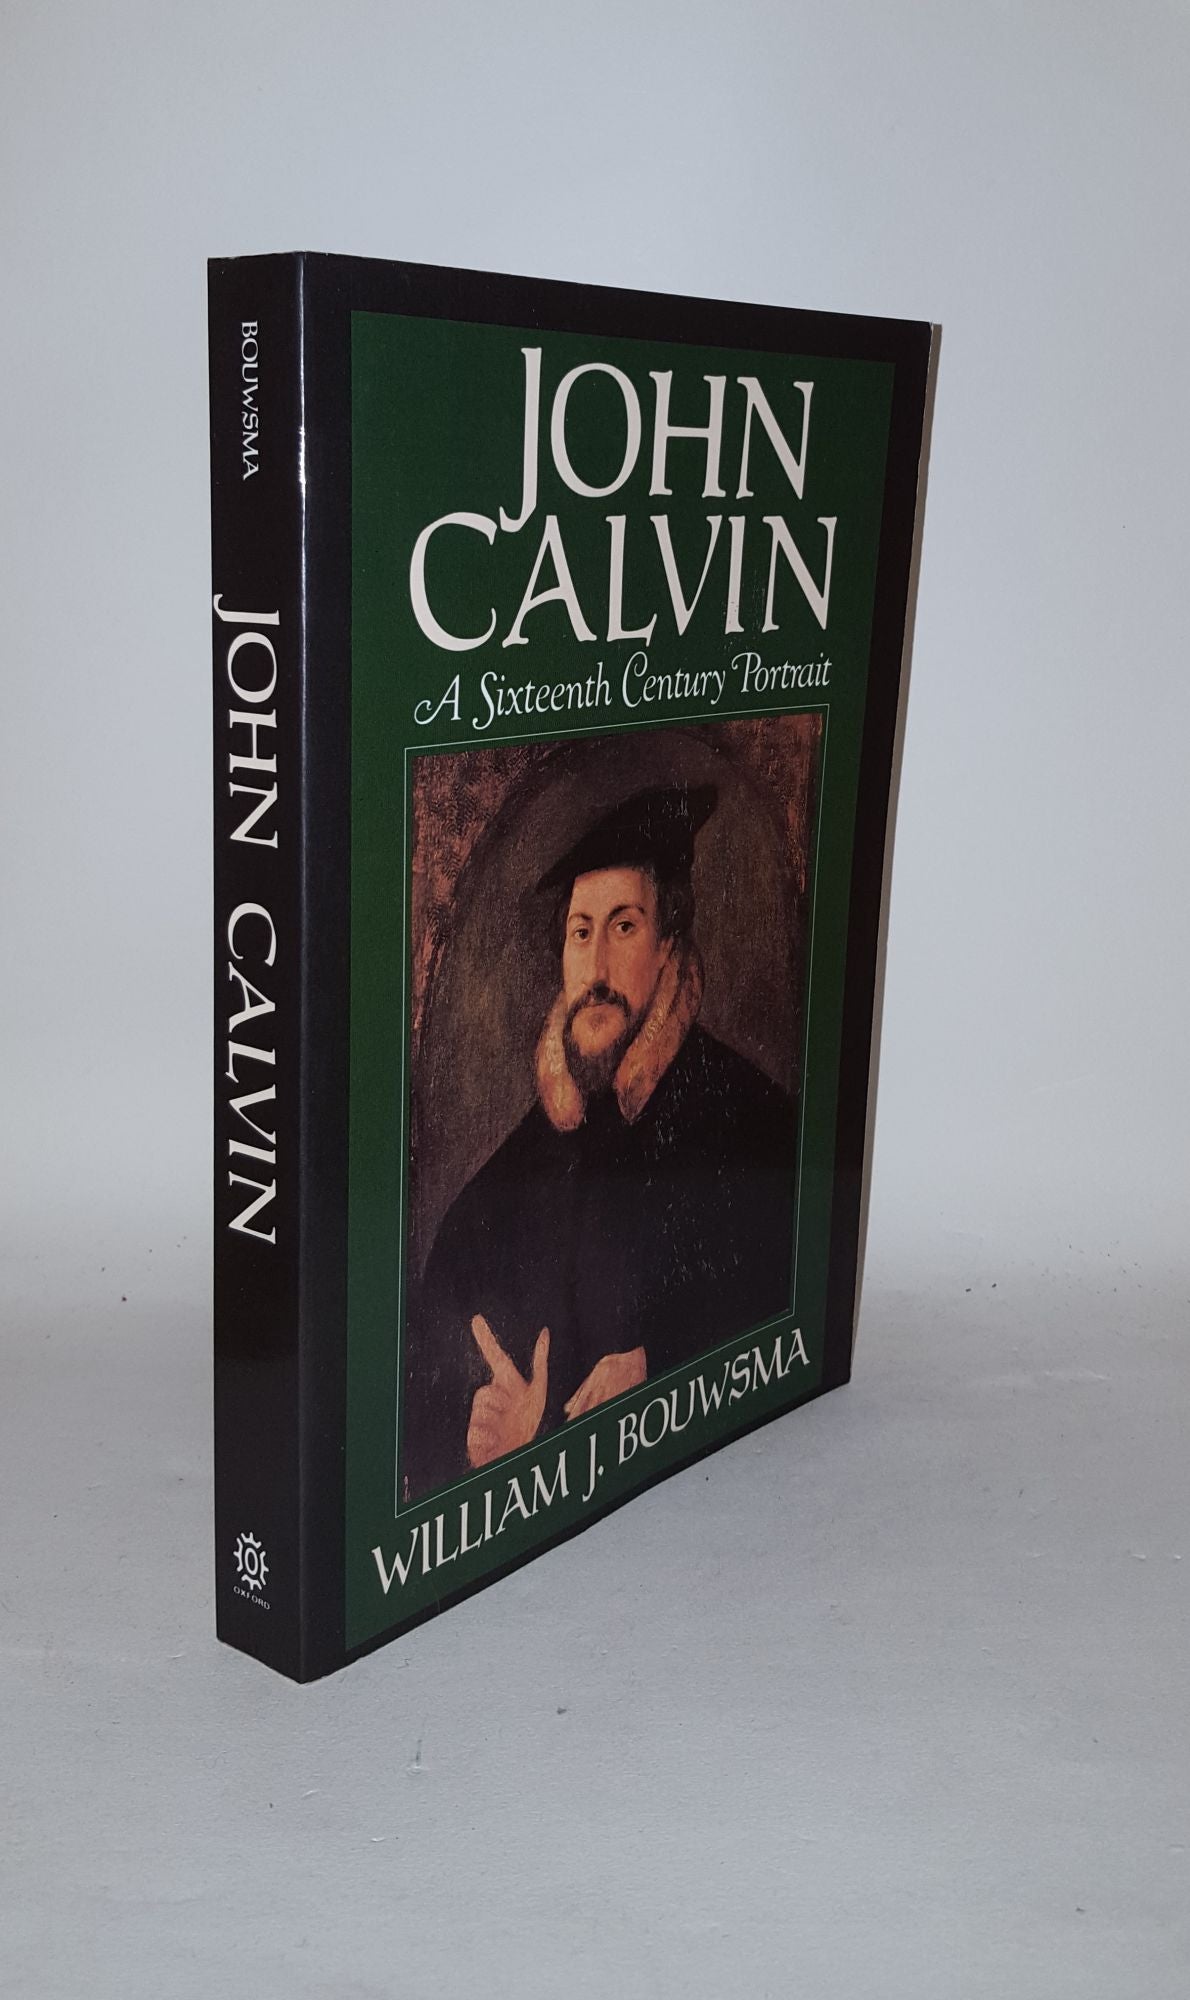 BOUWSMA William J. - John Calvin a Sixteenth Century Portrait